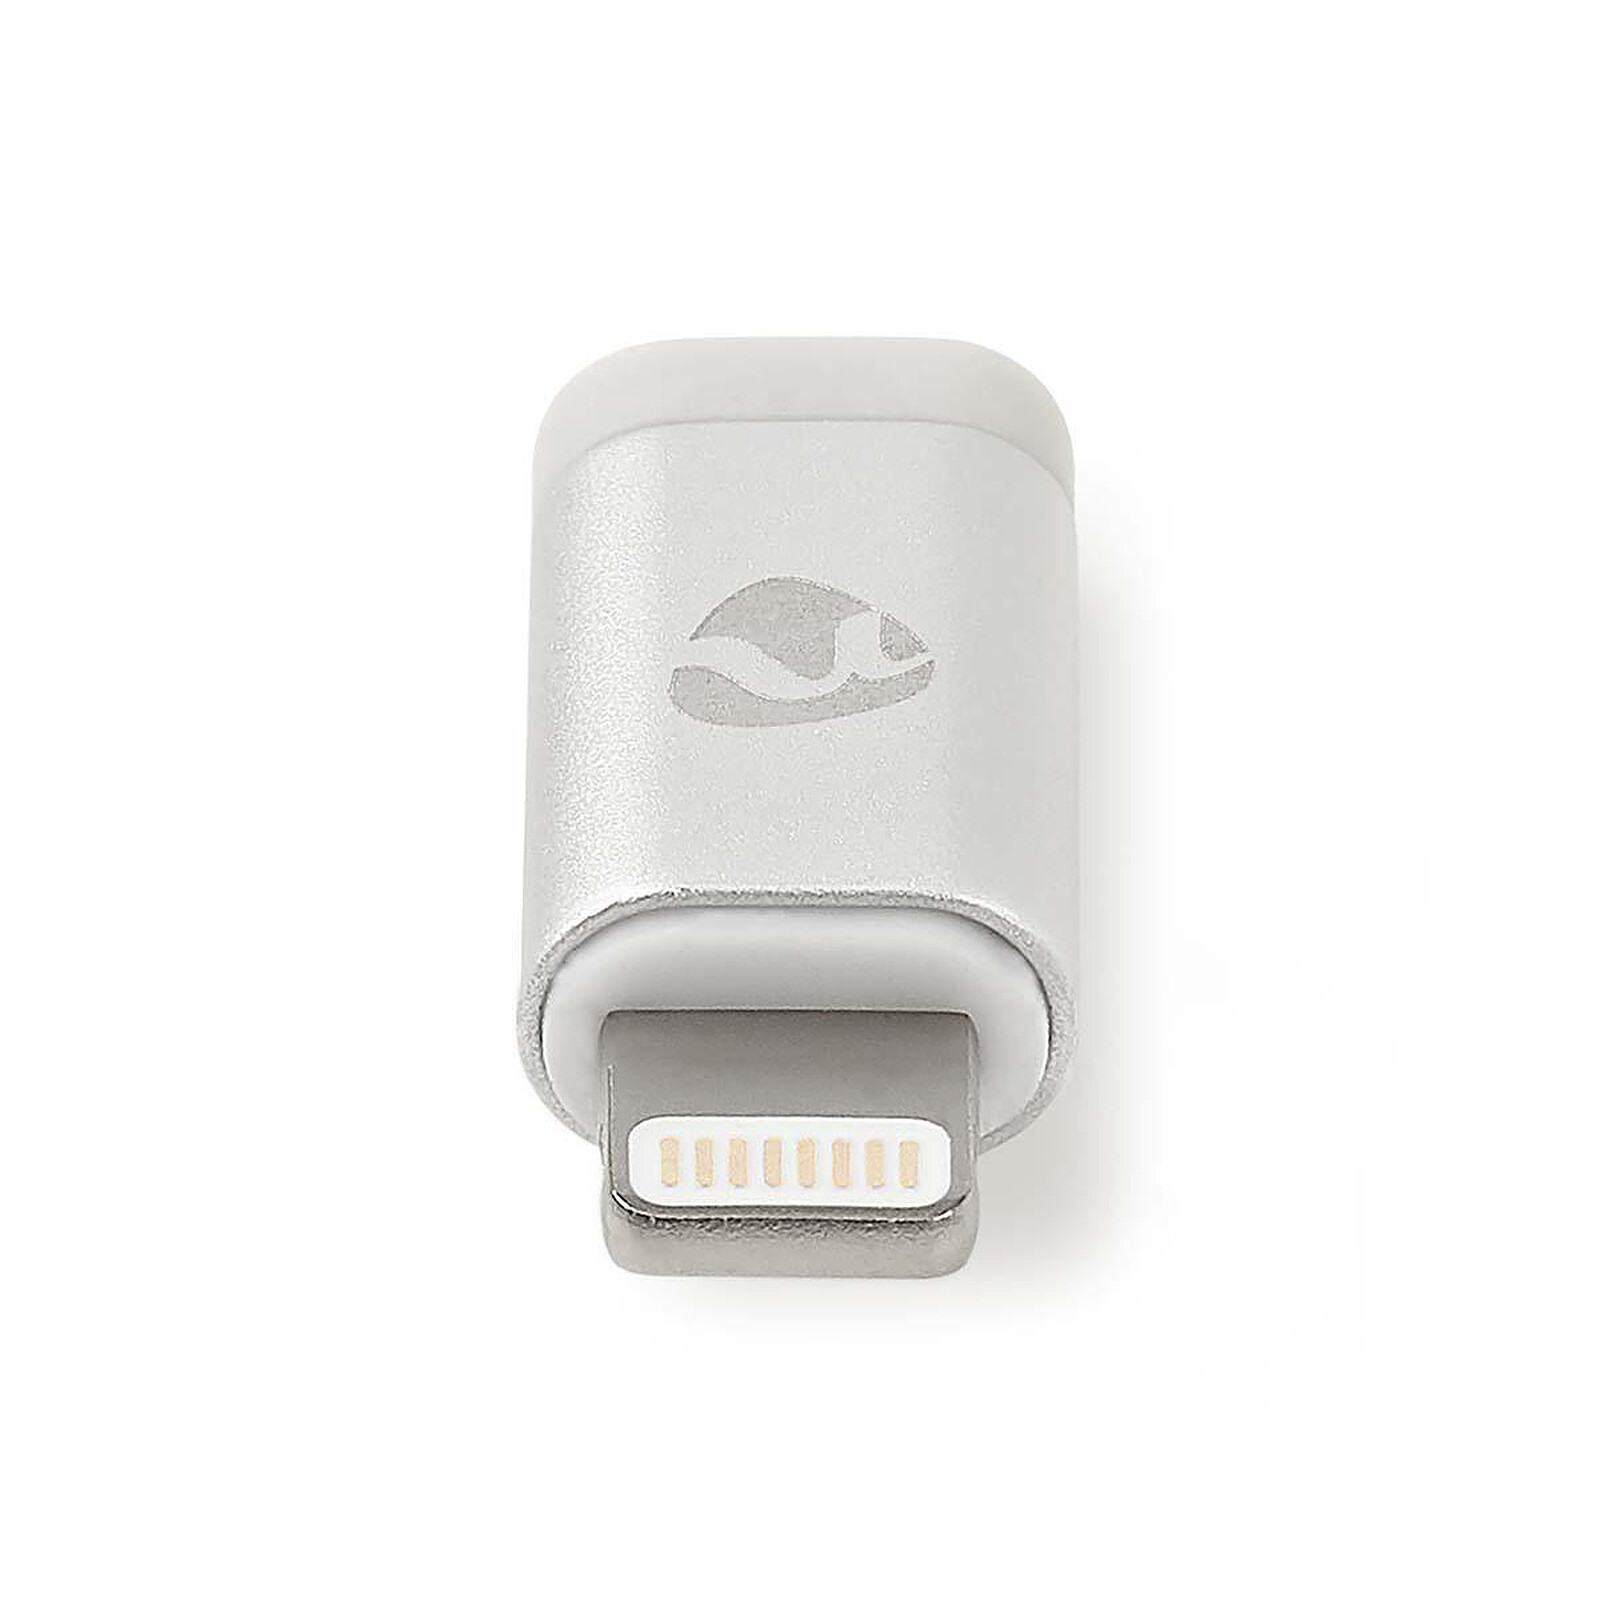 Адаптер apple lightning usb. Картридер Apple Lightning USB. Ugreen адаптер Lightning USB для флешки. Адаптер Apple Lightning на USB 2.0 микрофон.